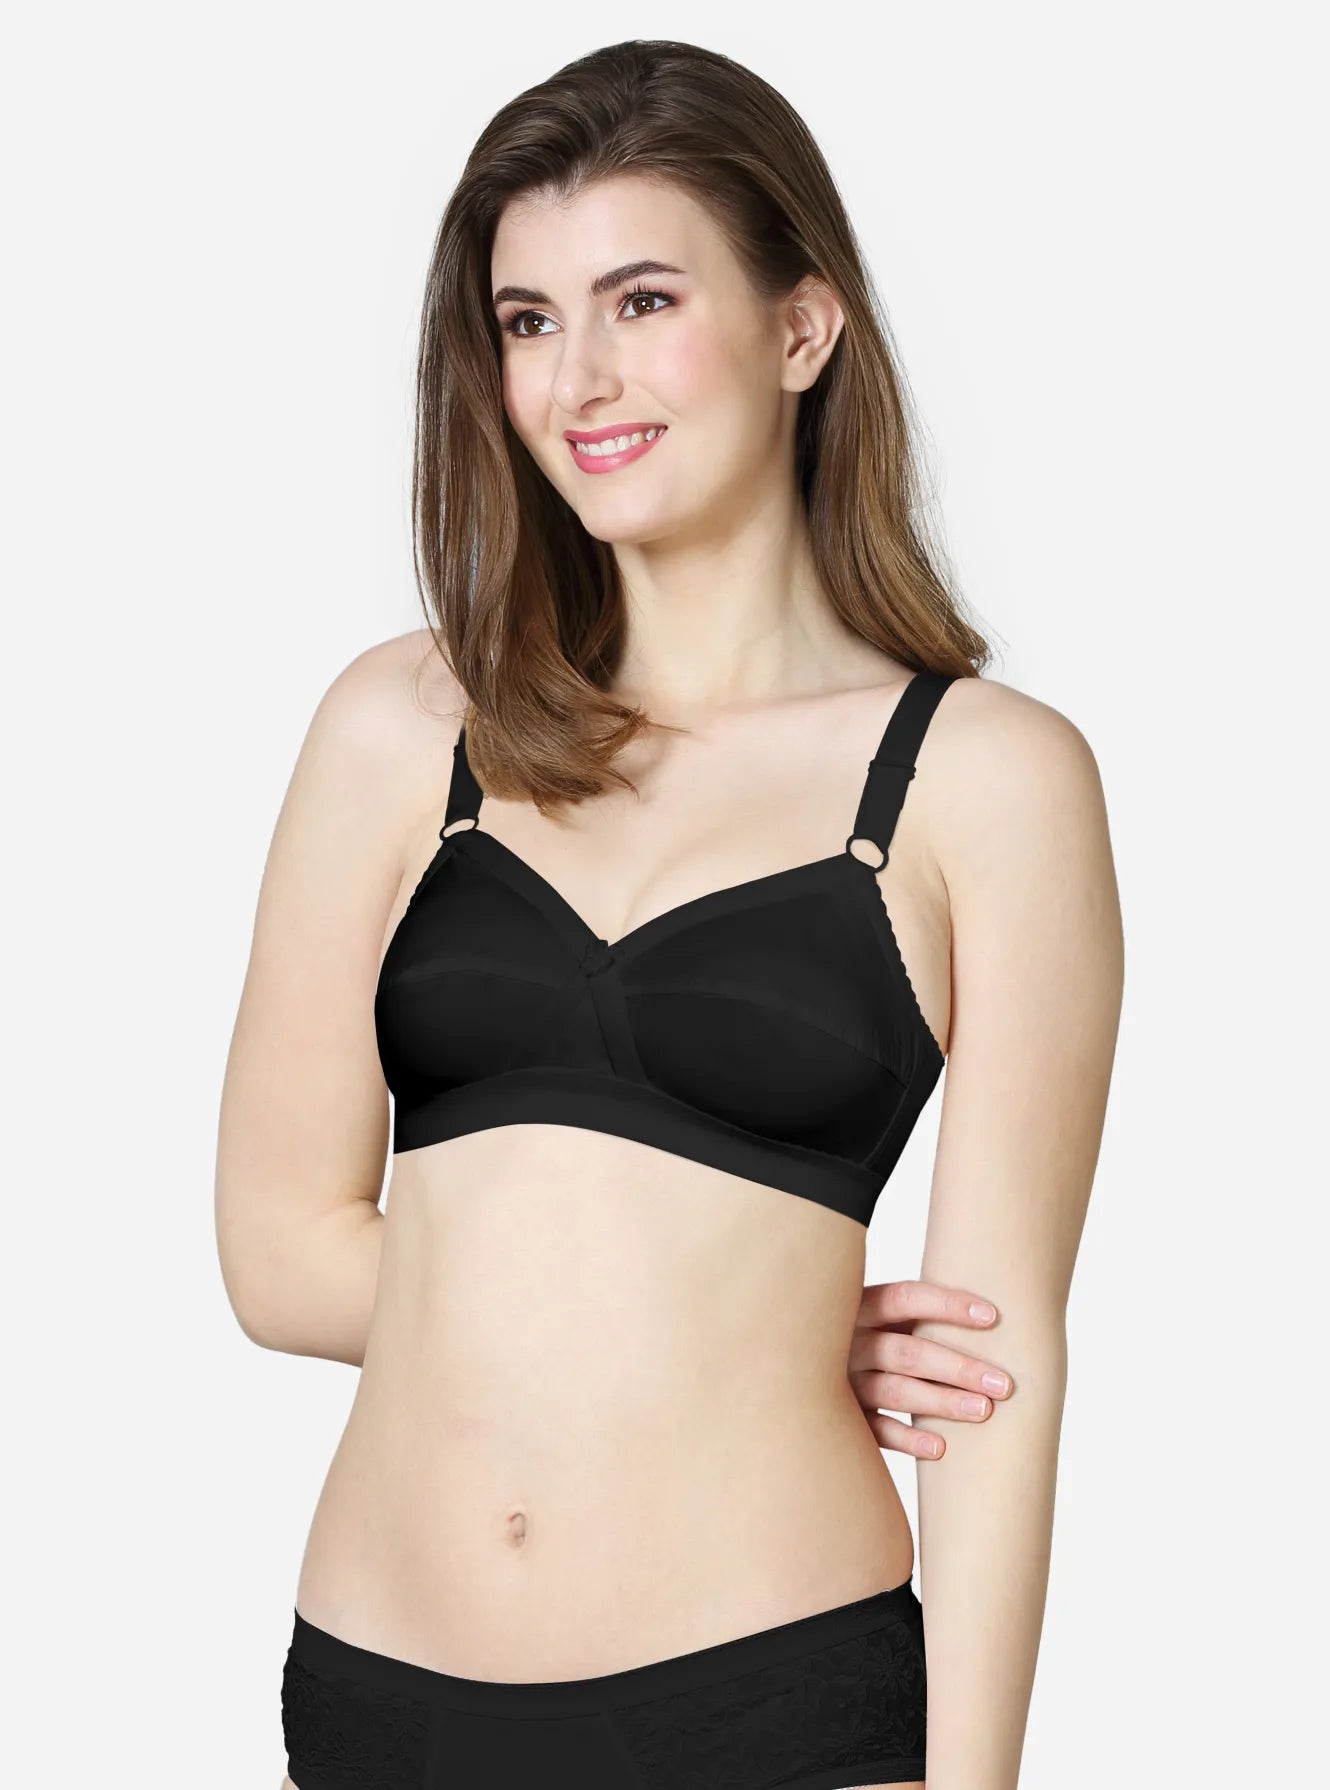 VSTAR JOY Full coverage plus size cross over bra over bust bra, plus size bra - bare essentials